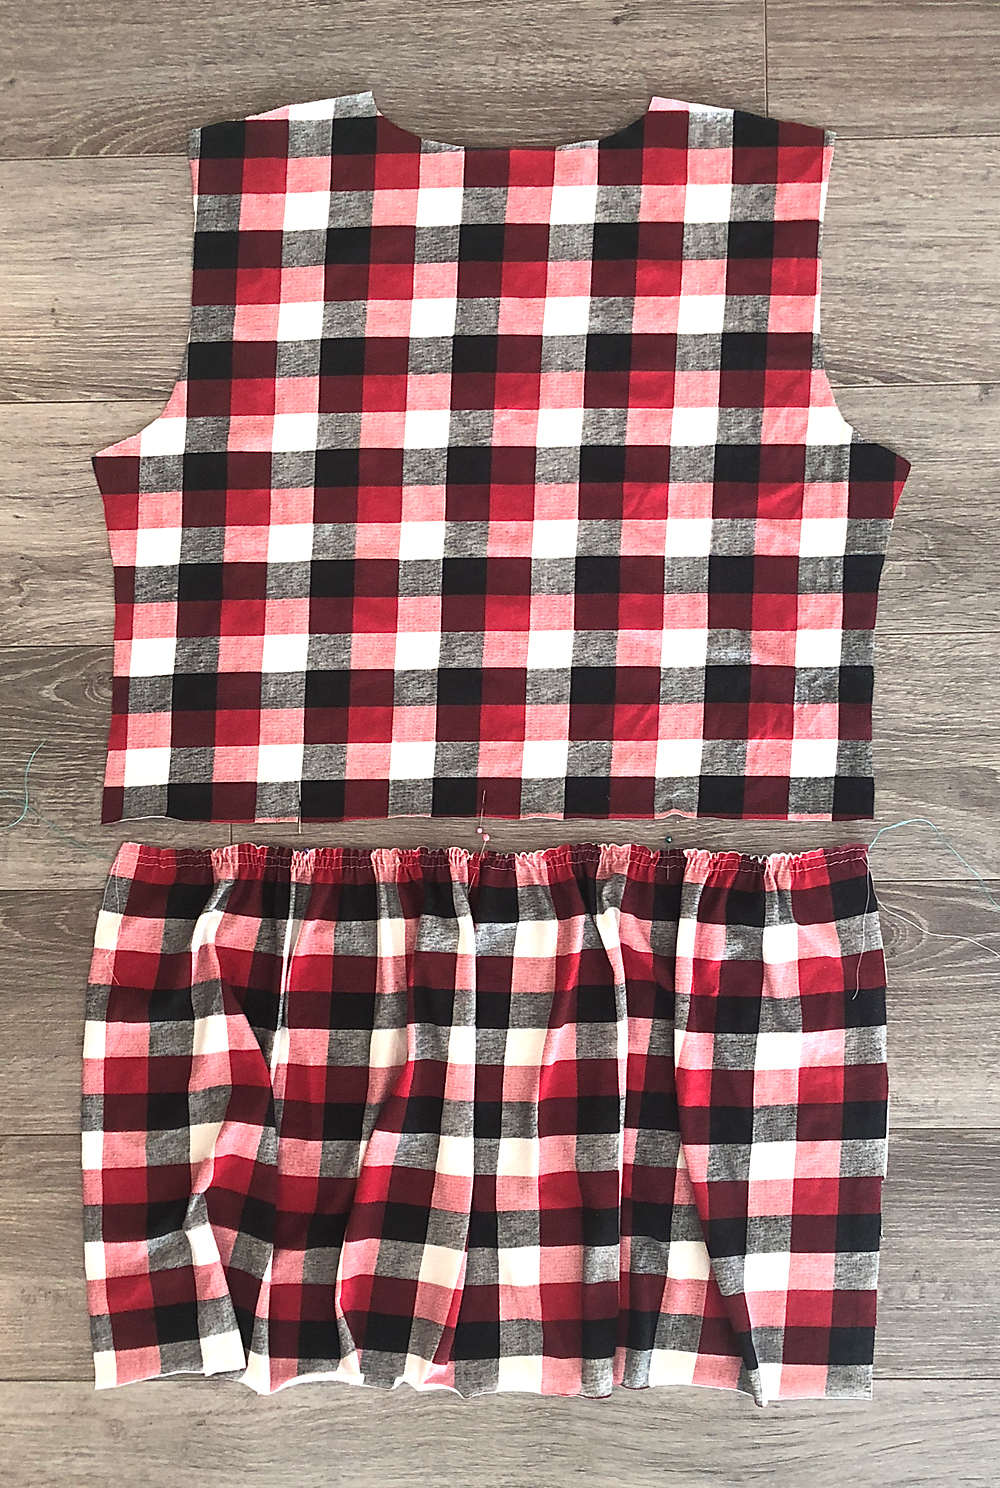 Peplum shirt piece with skirt gathered to the same width